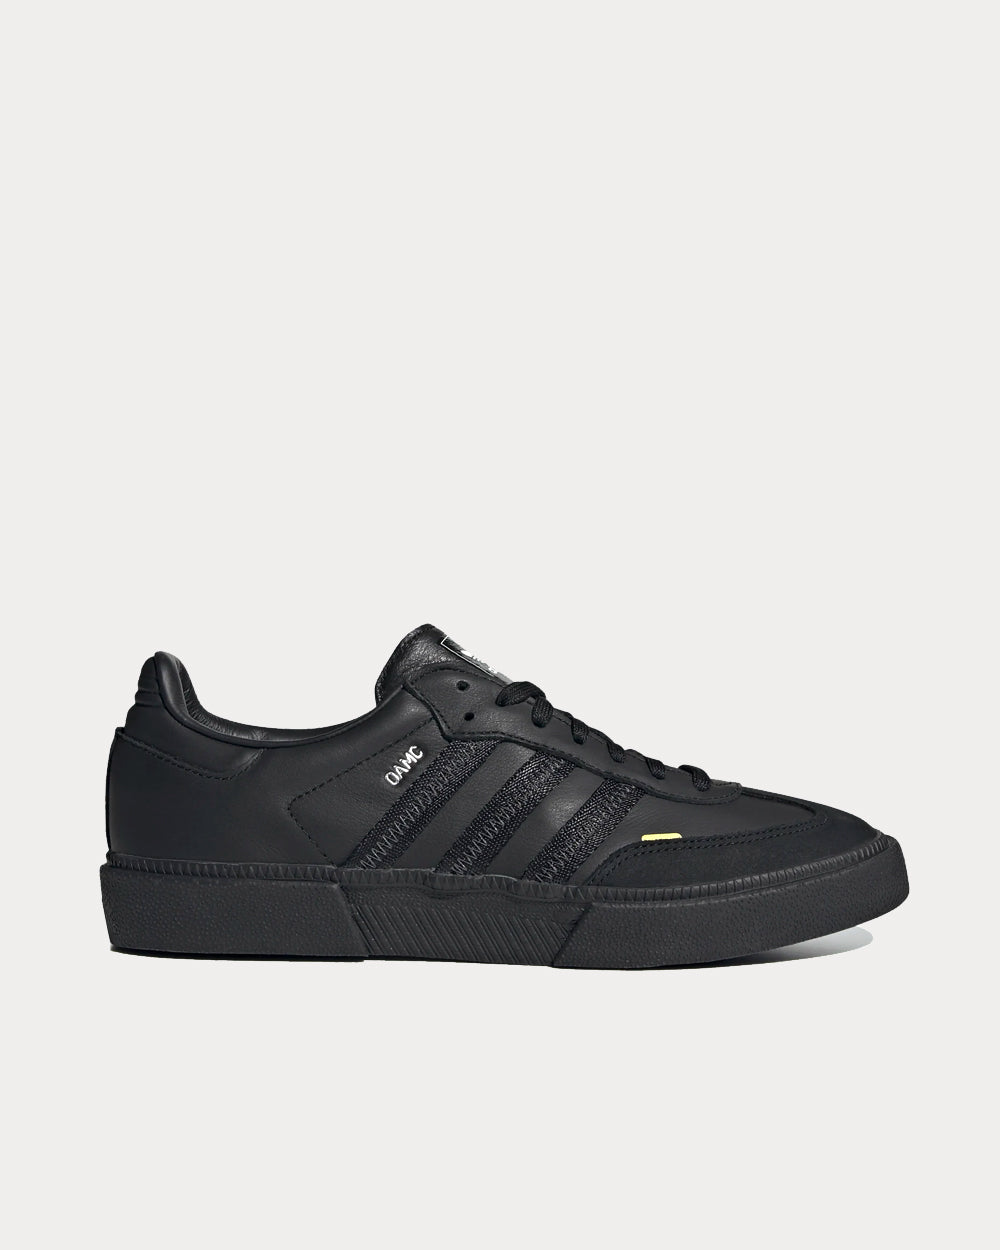 Adidas x OAMC Type O-8 Core Black / Grey Six Low Top Sneakers